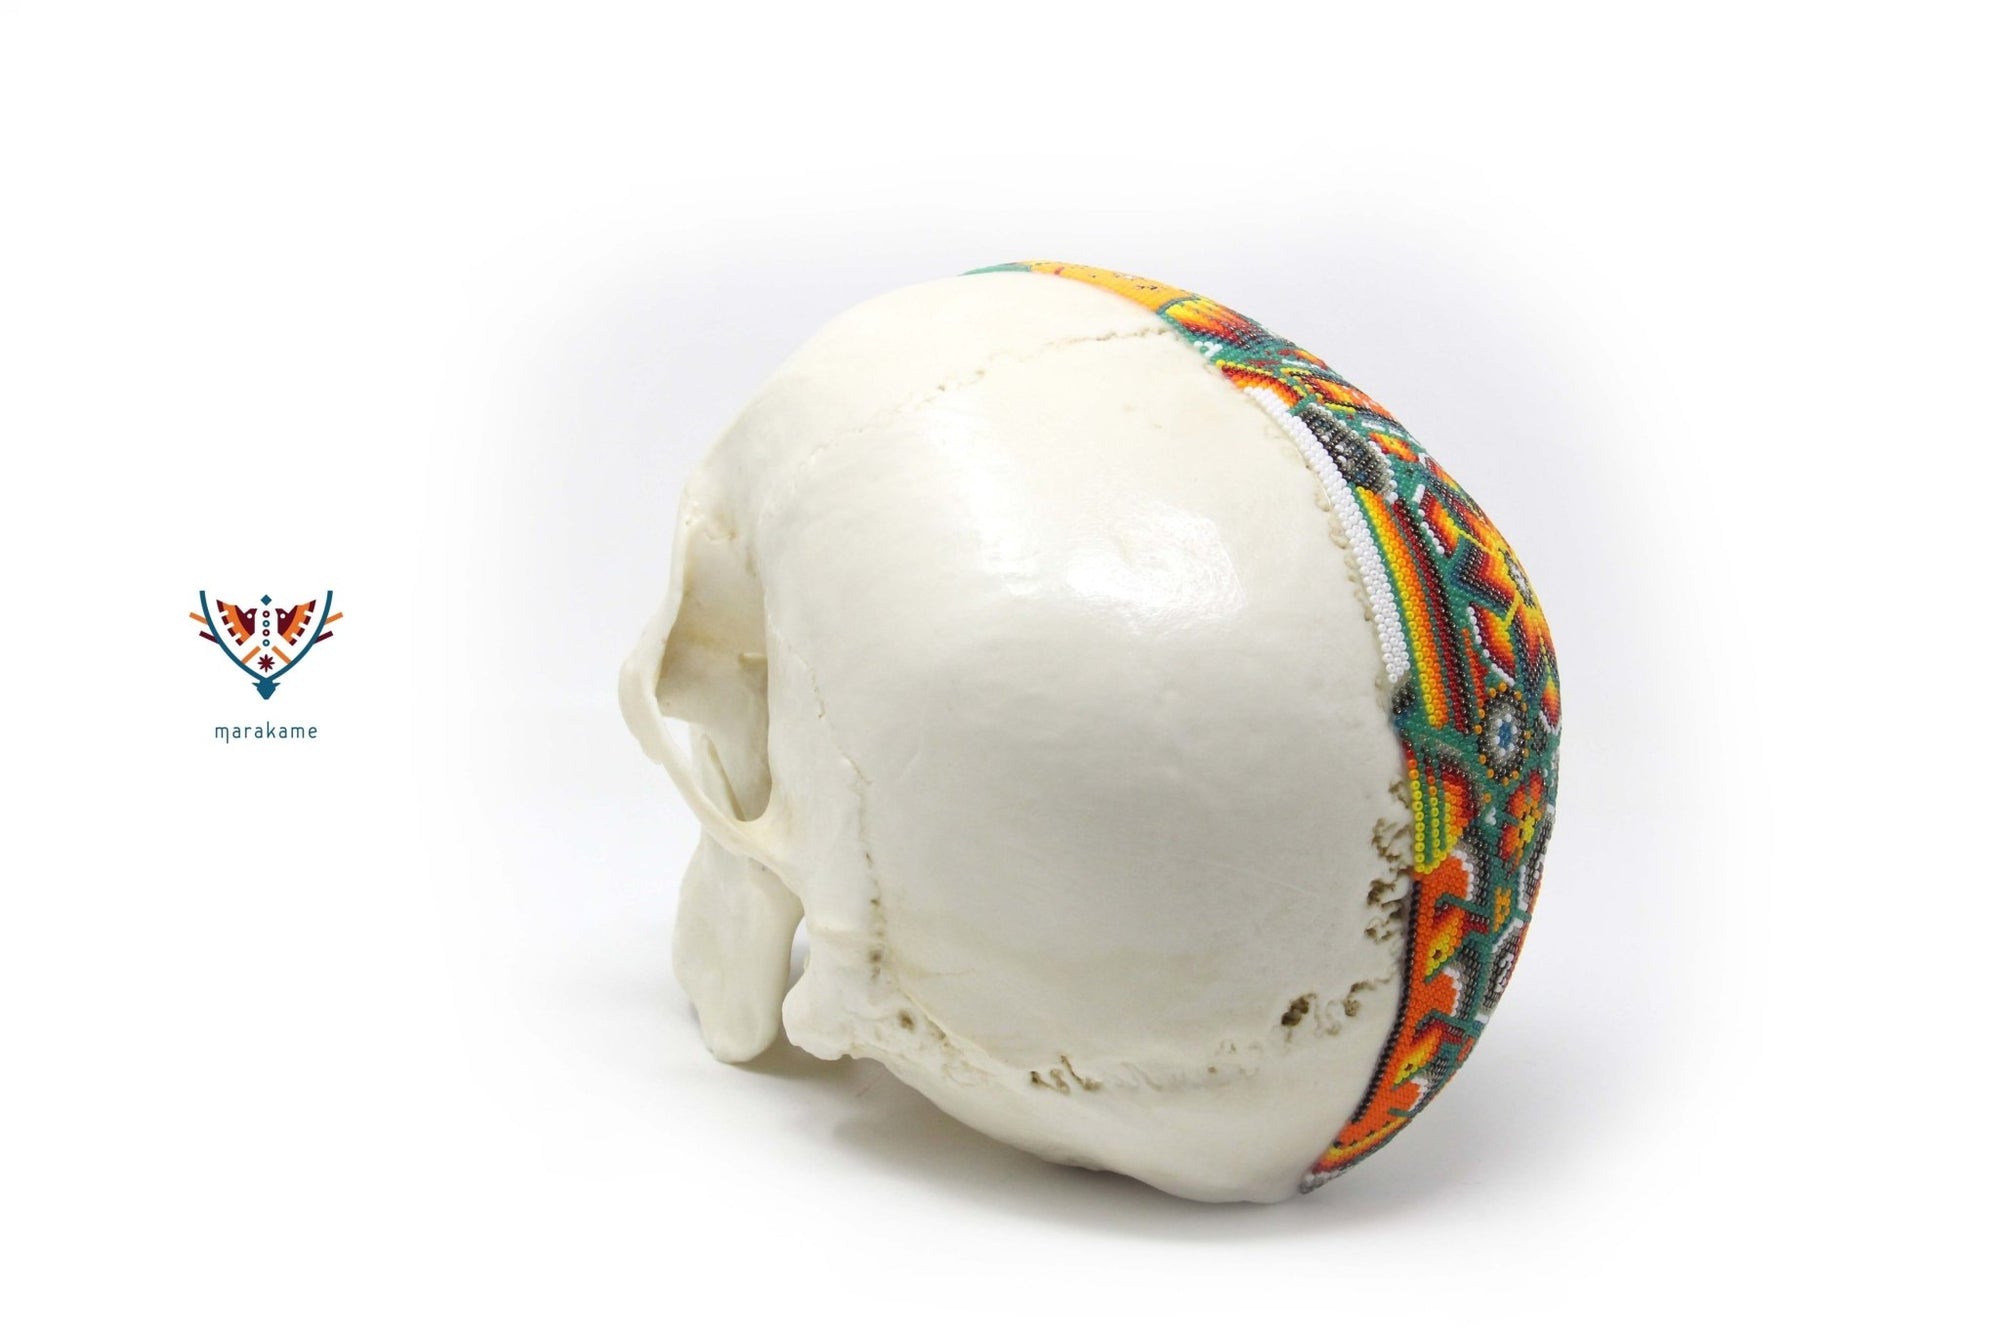 Hyperrealistic Human Skull "Xapawiyemeta" - Huichol Art - Marakame